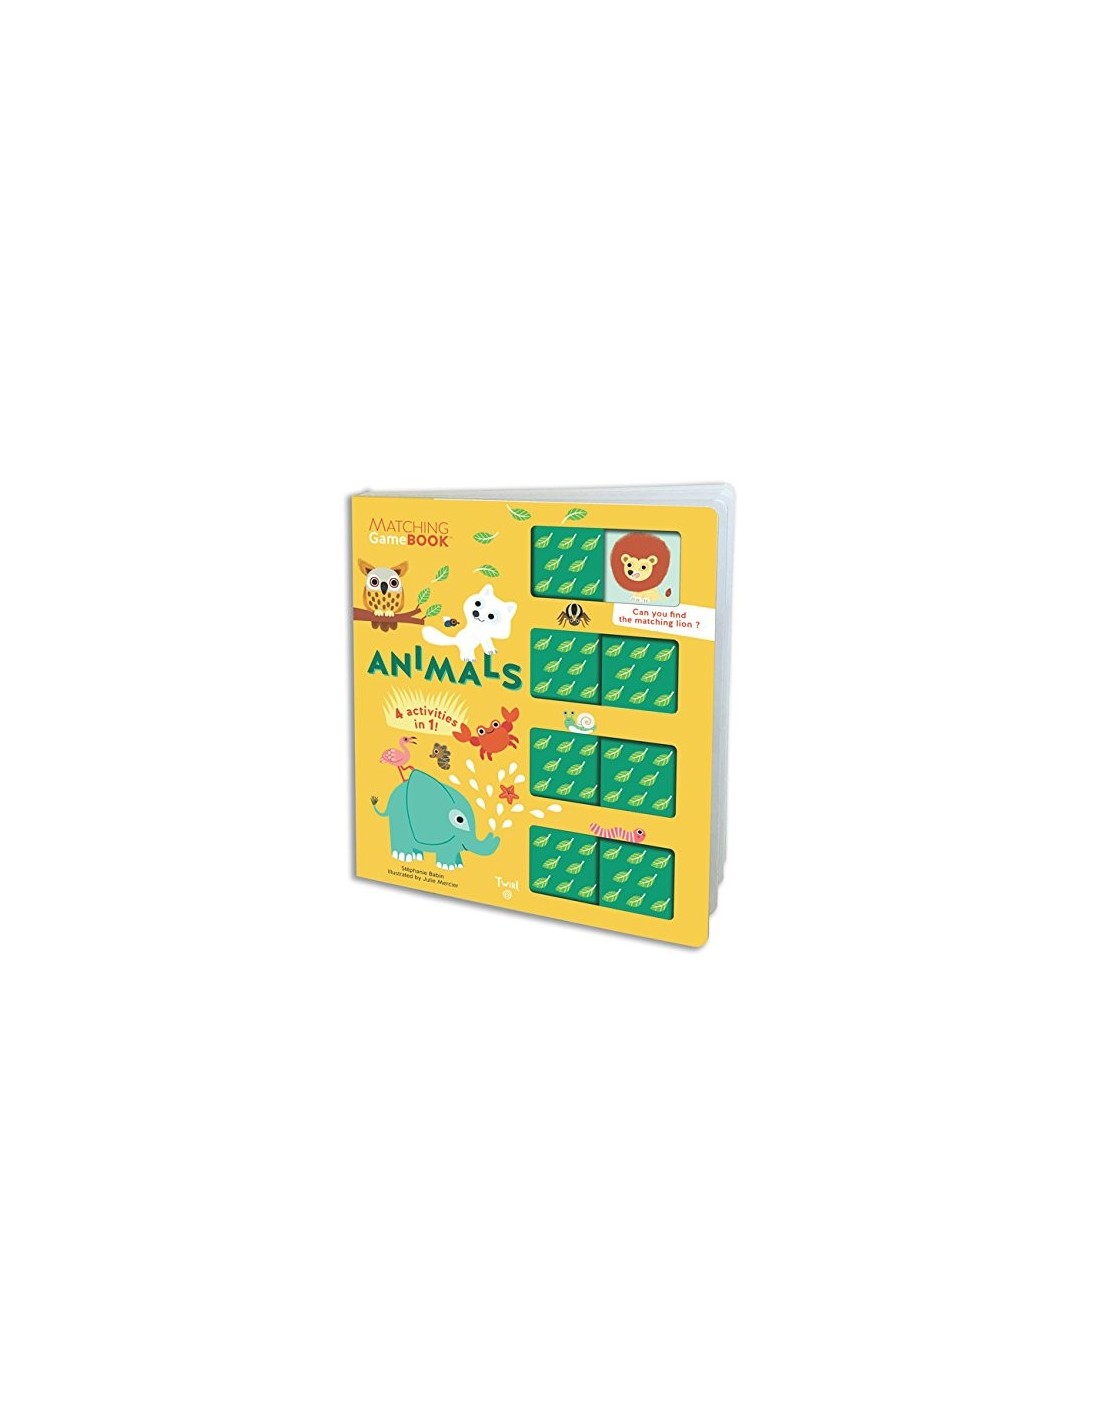 Animals (Matching Game Book)